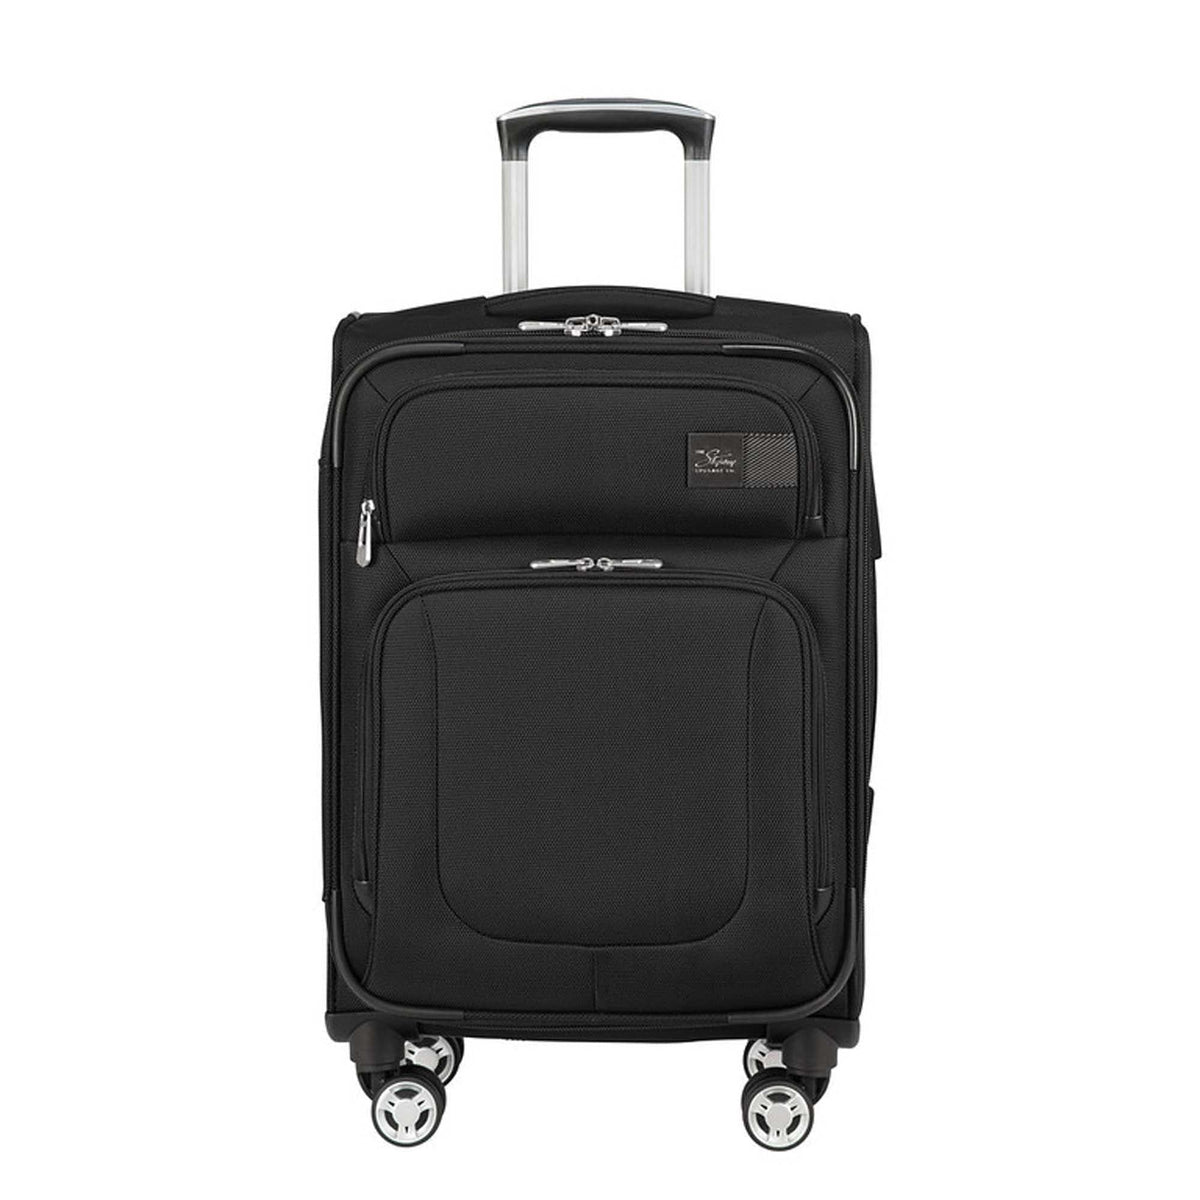 Skyway Sigma 6.0 Softside Carry-On Luggage